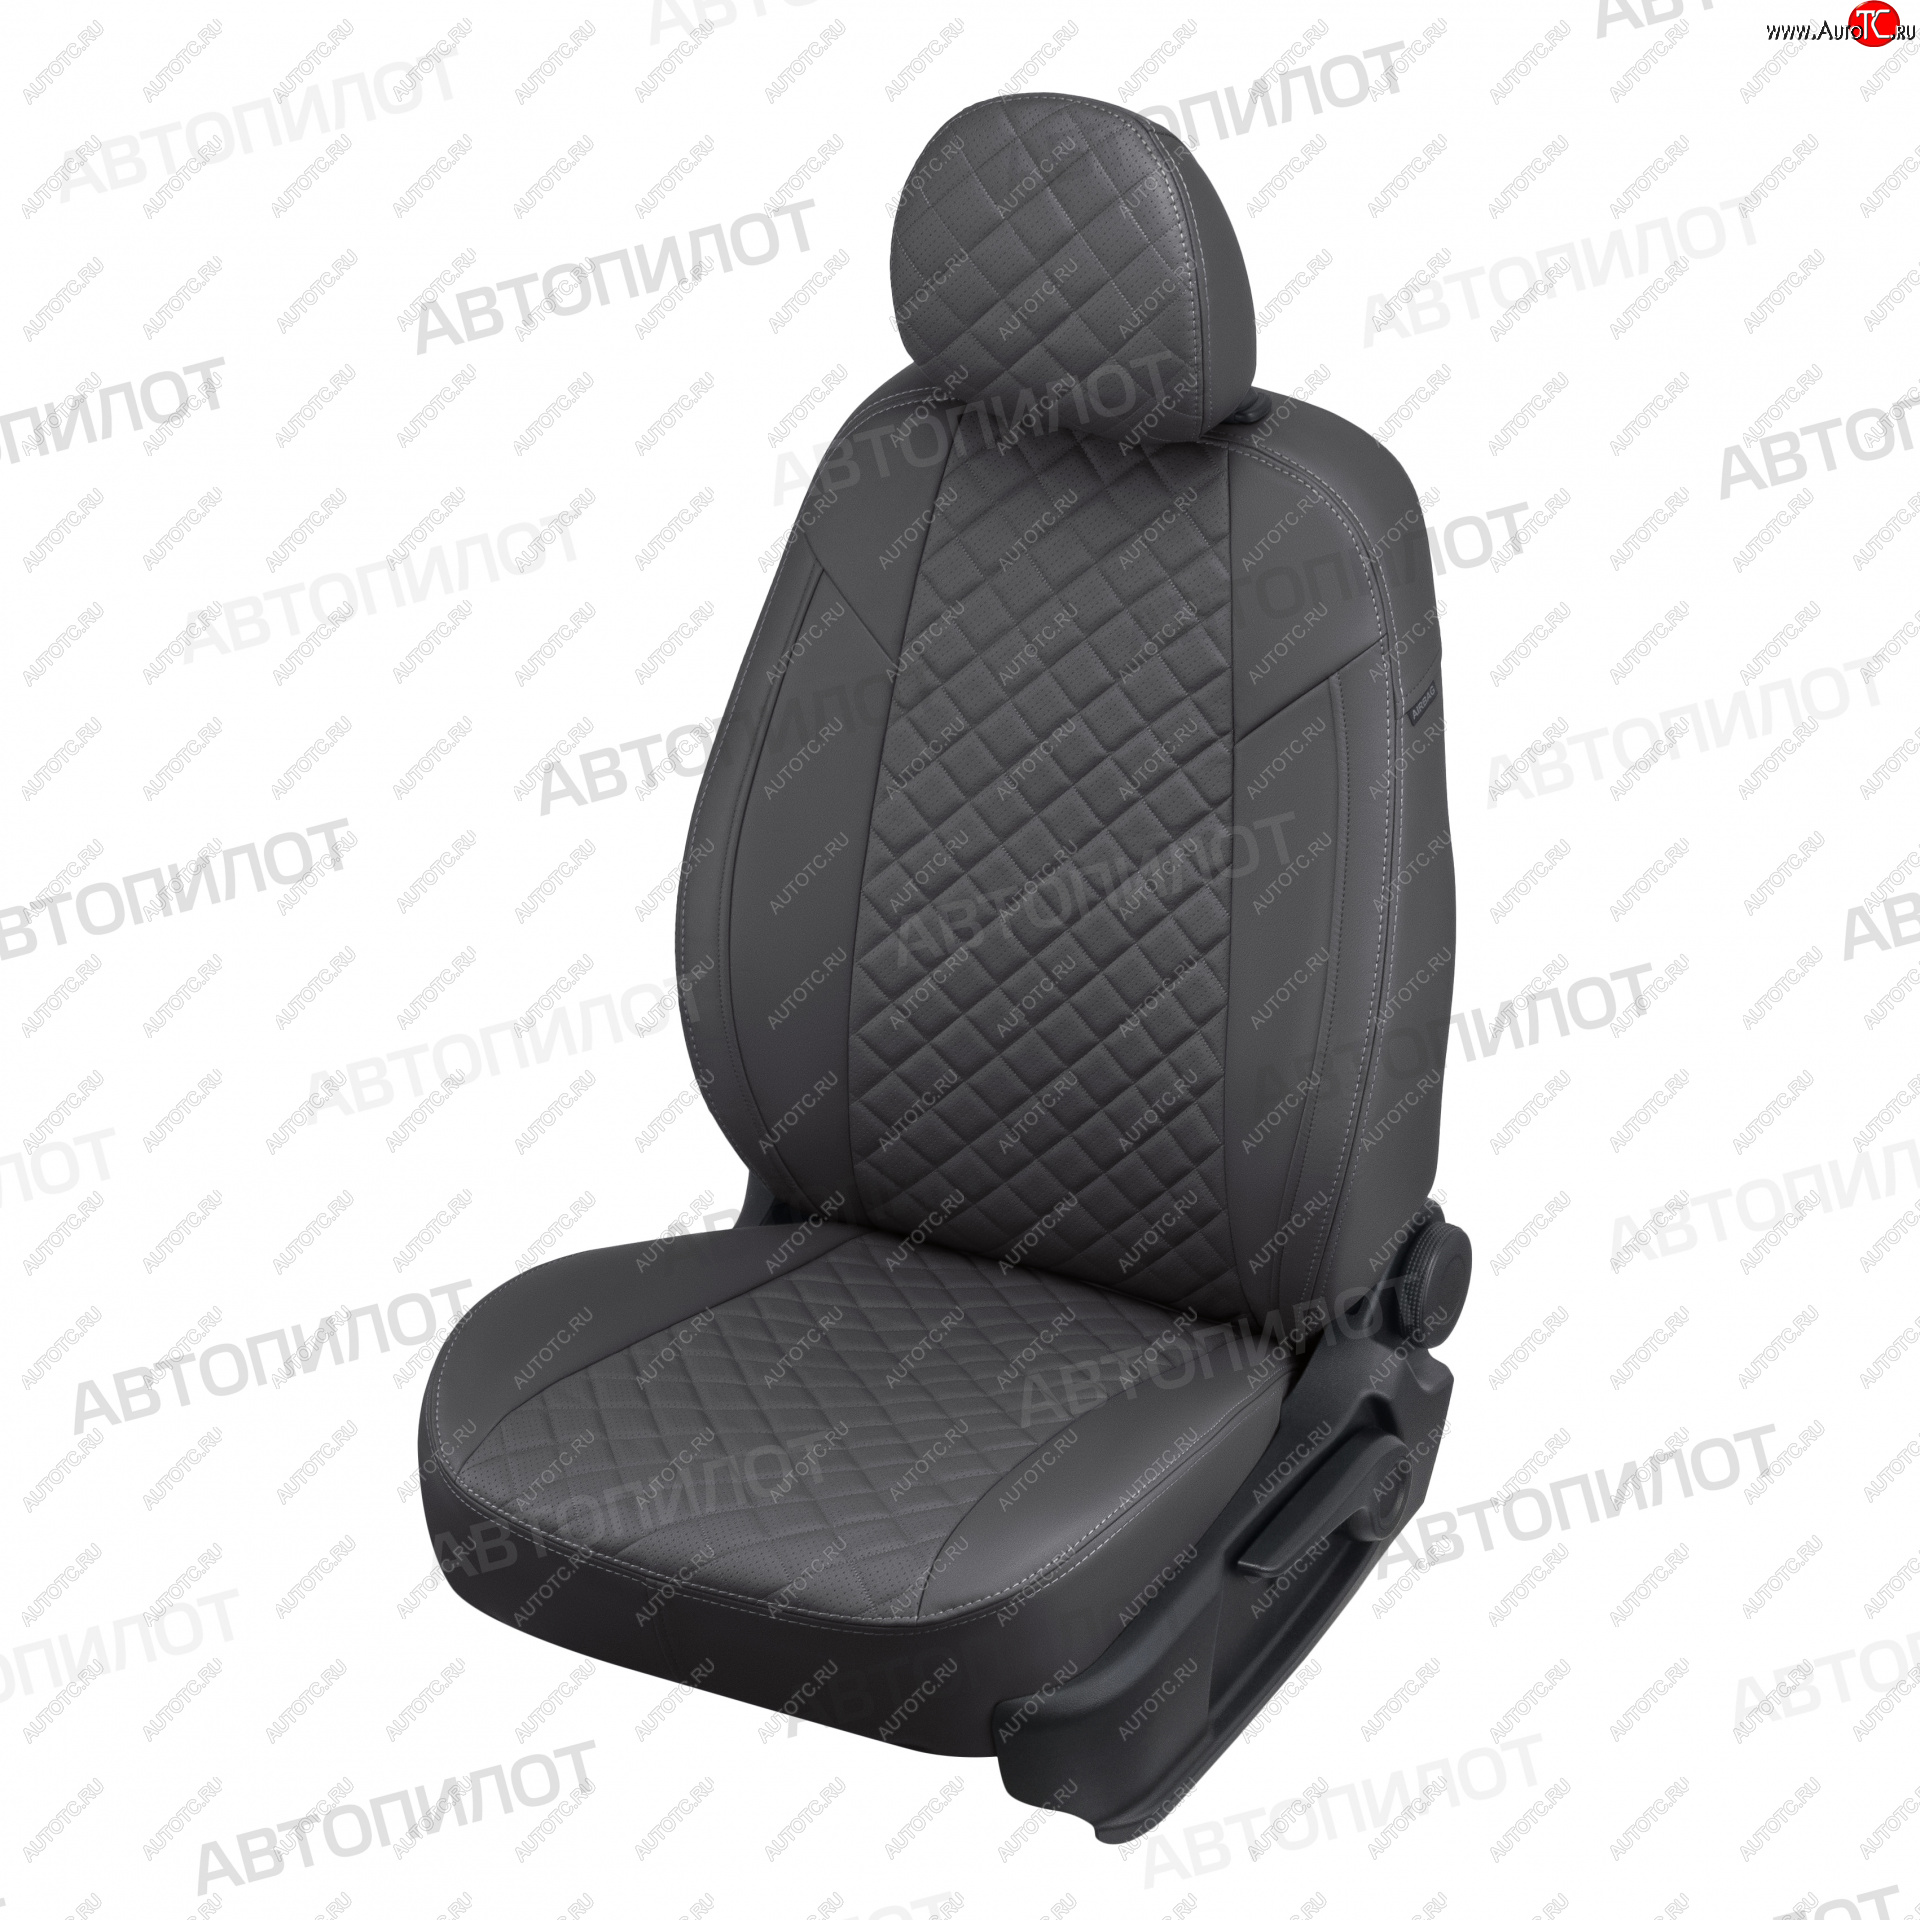 22 299 р. Чехлы сидений (9 мест, экокожа) Автопилот Ромб  Ford Transit  4 (2014-2021) (темно-серый)